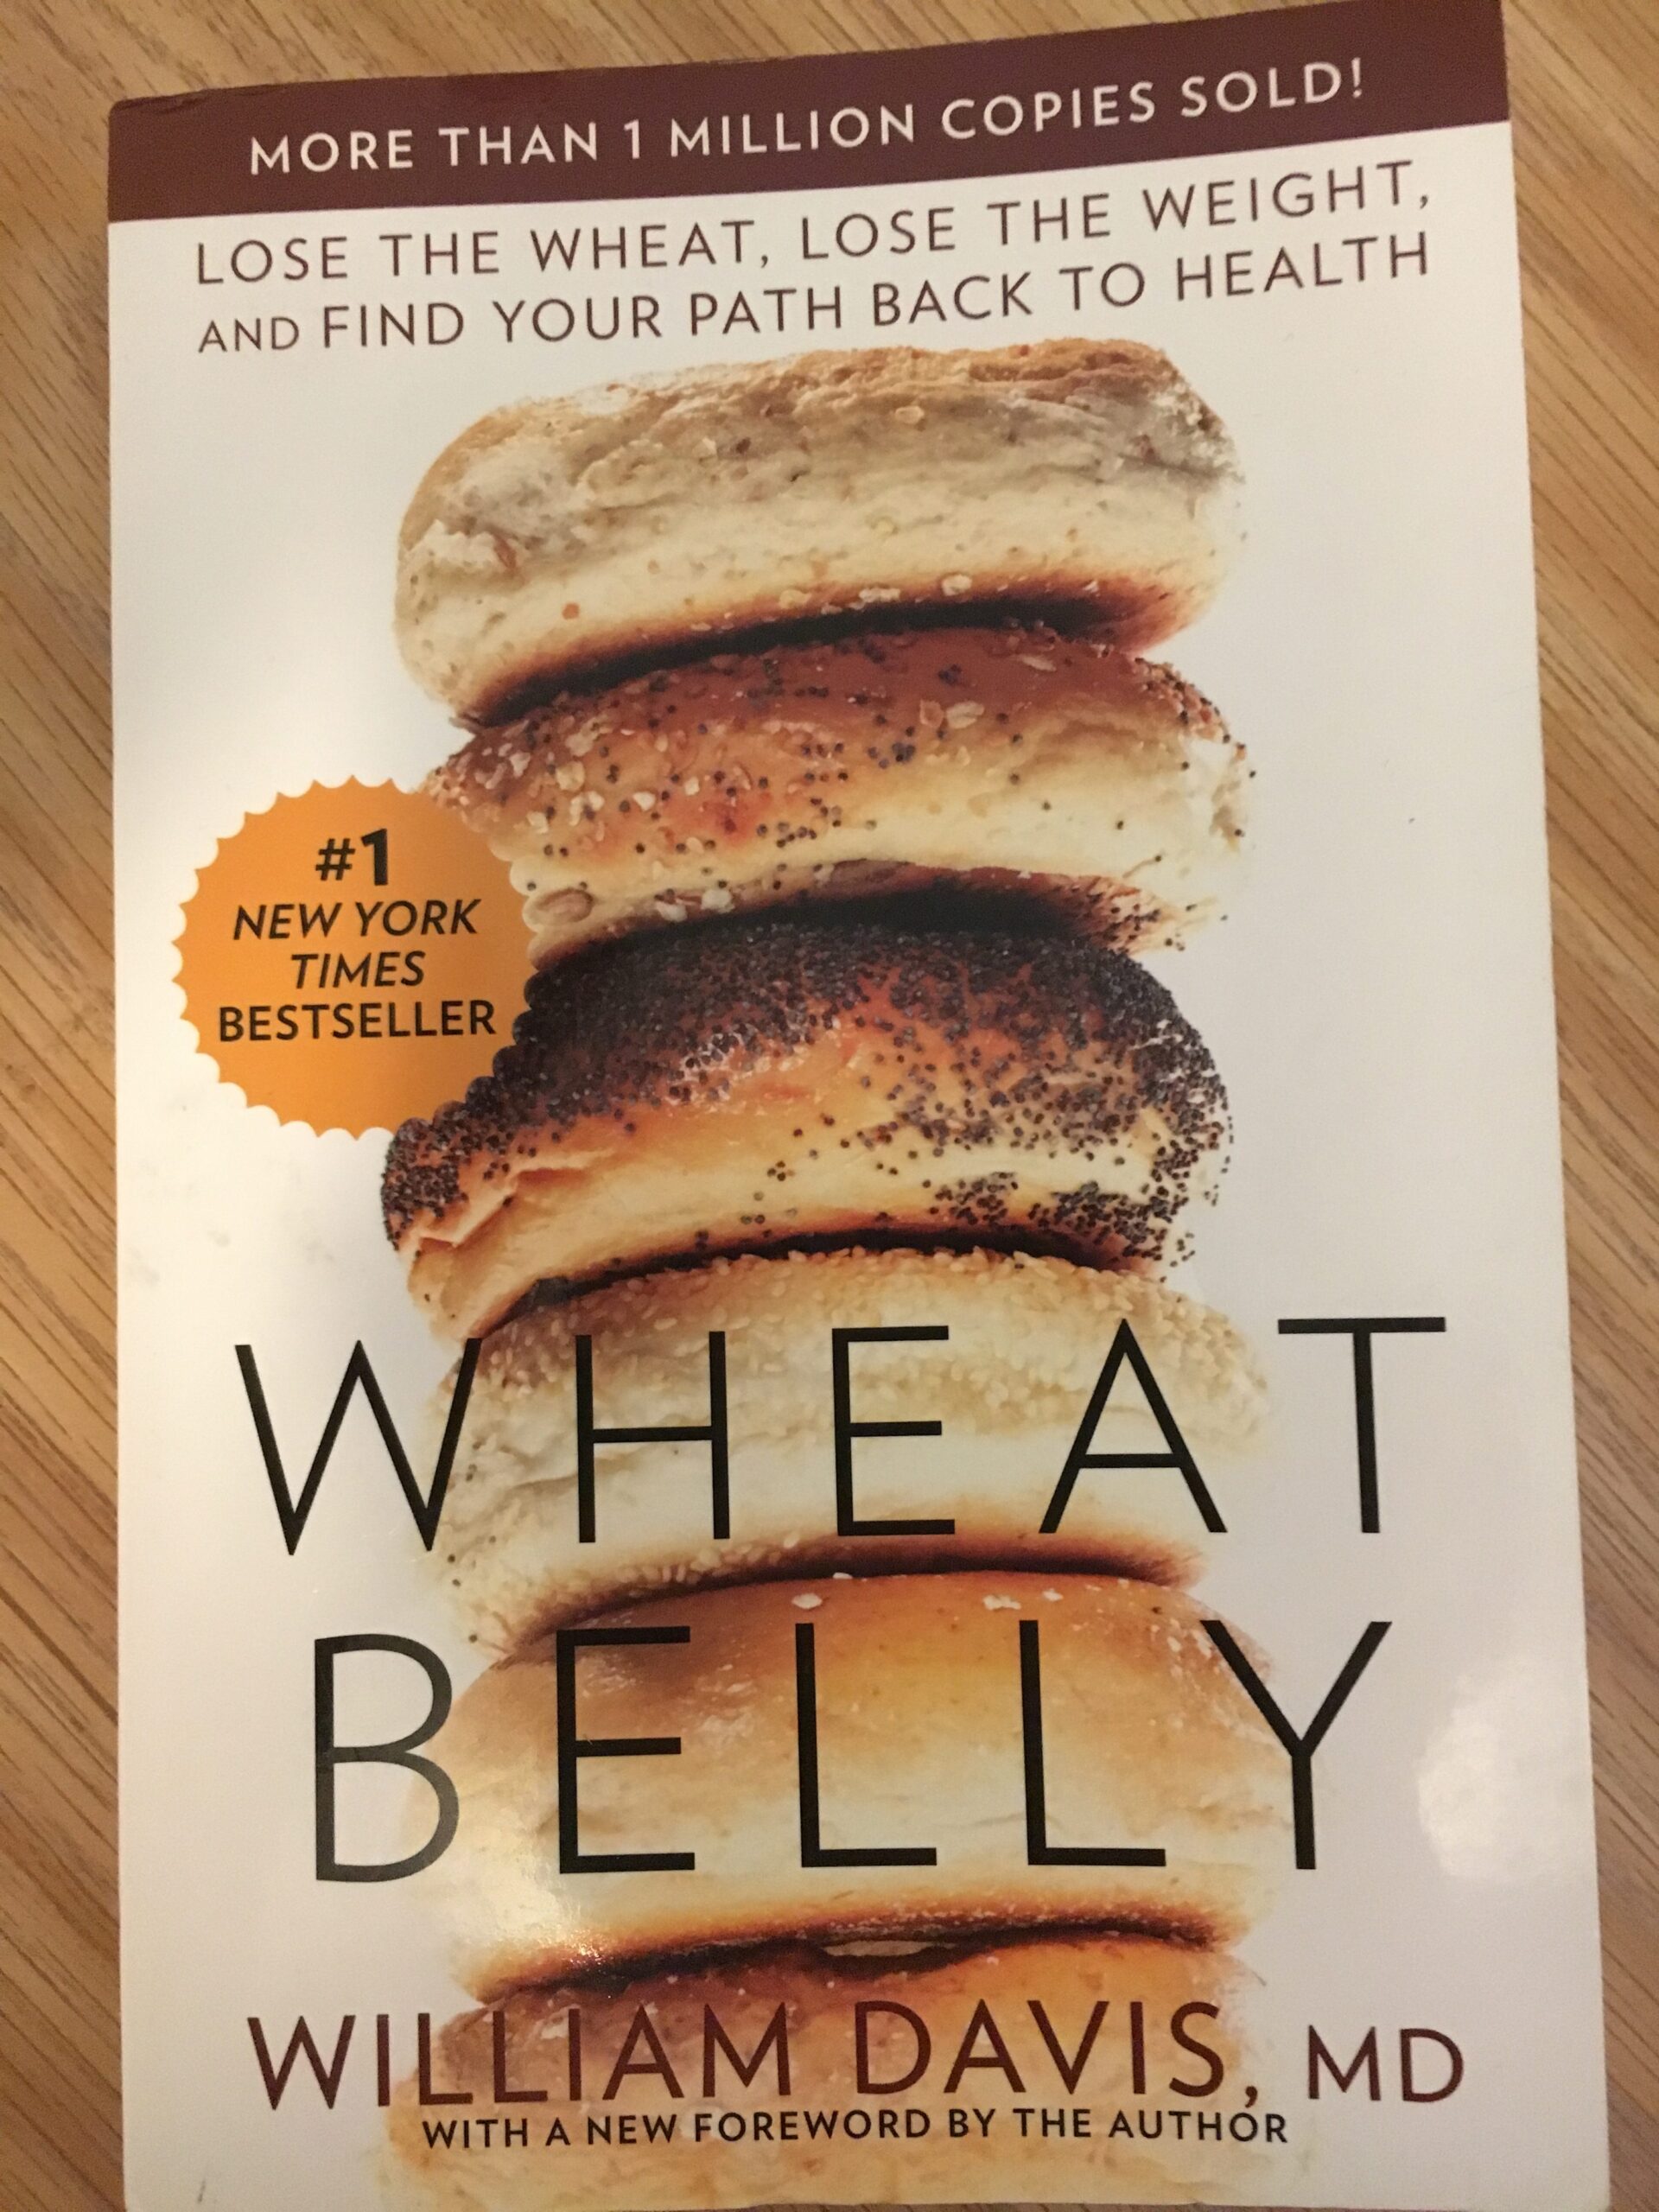 Wheat belly by William Davis, MD